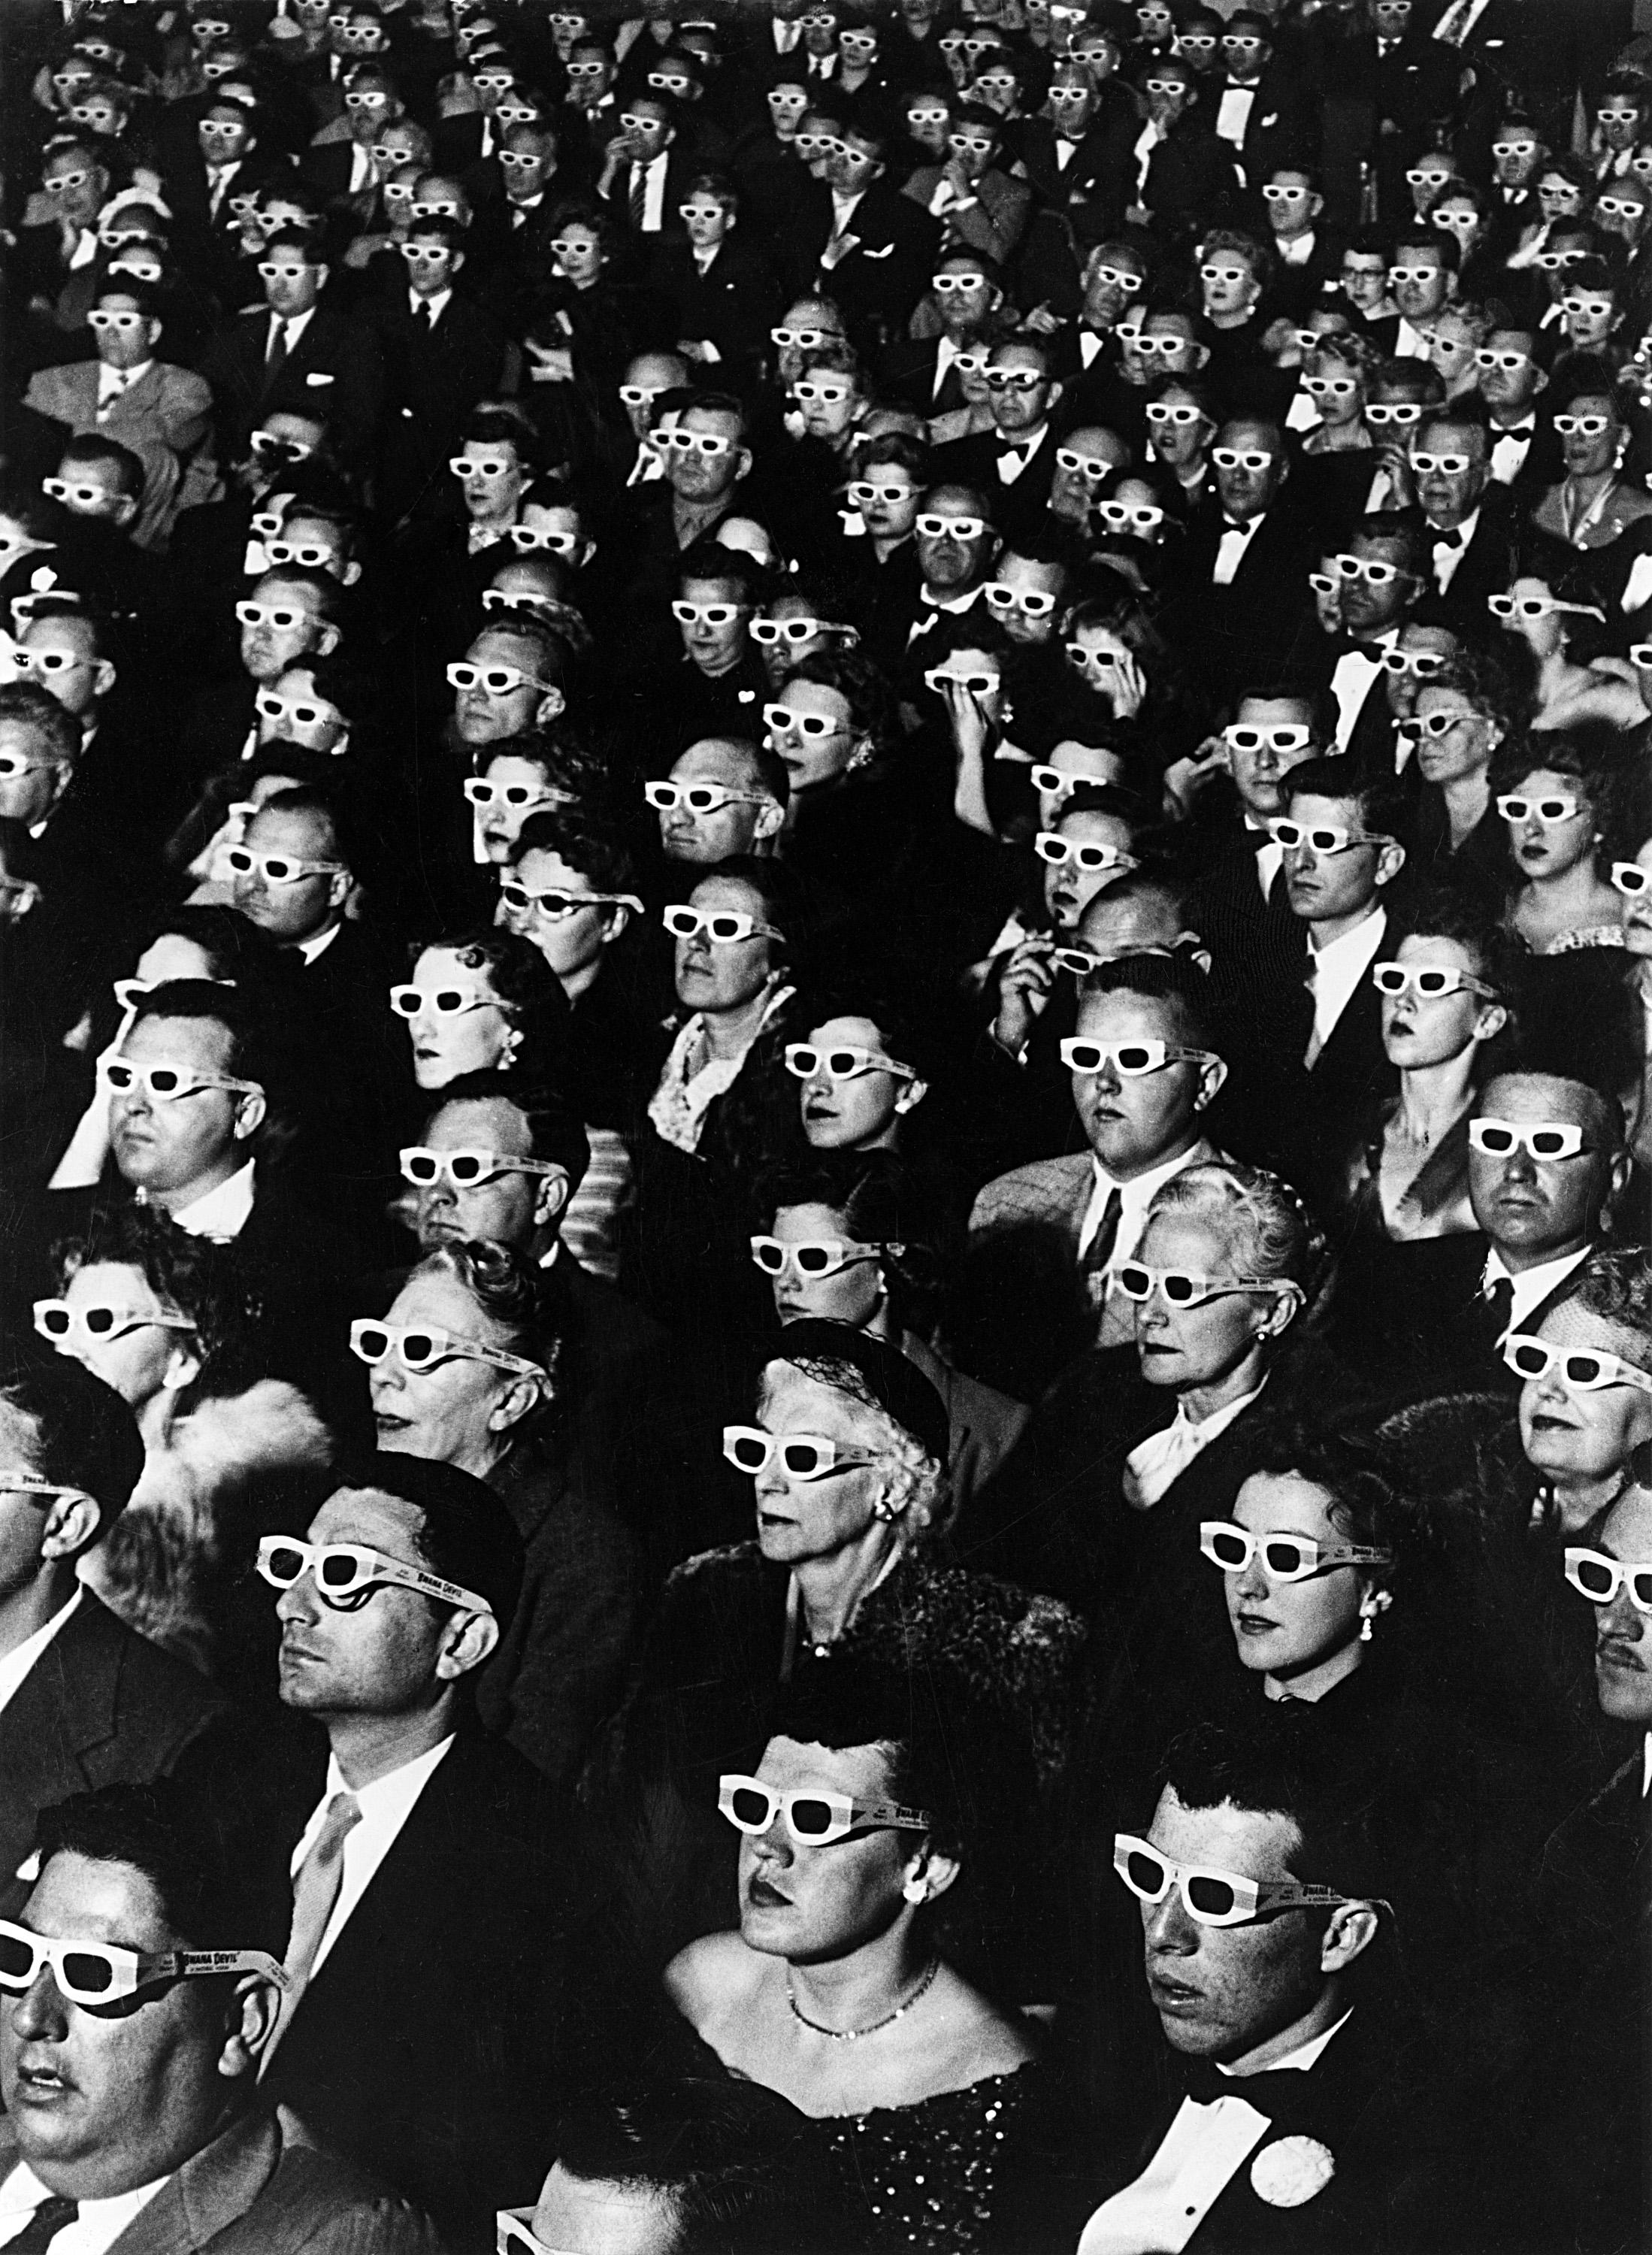 J. R. Eyerman Black and White Photograph - 3D Glasses